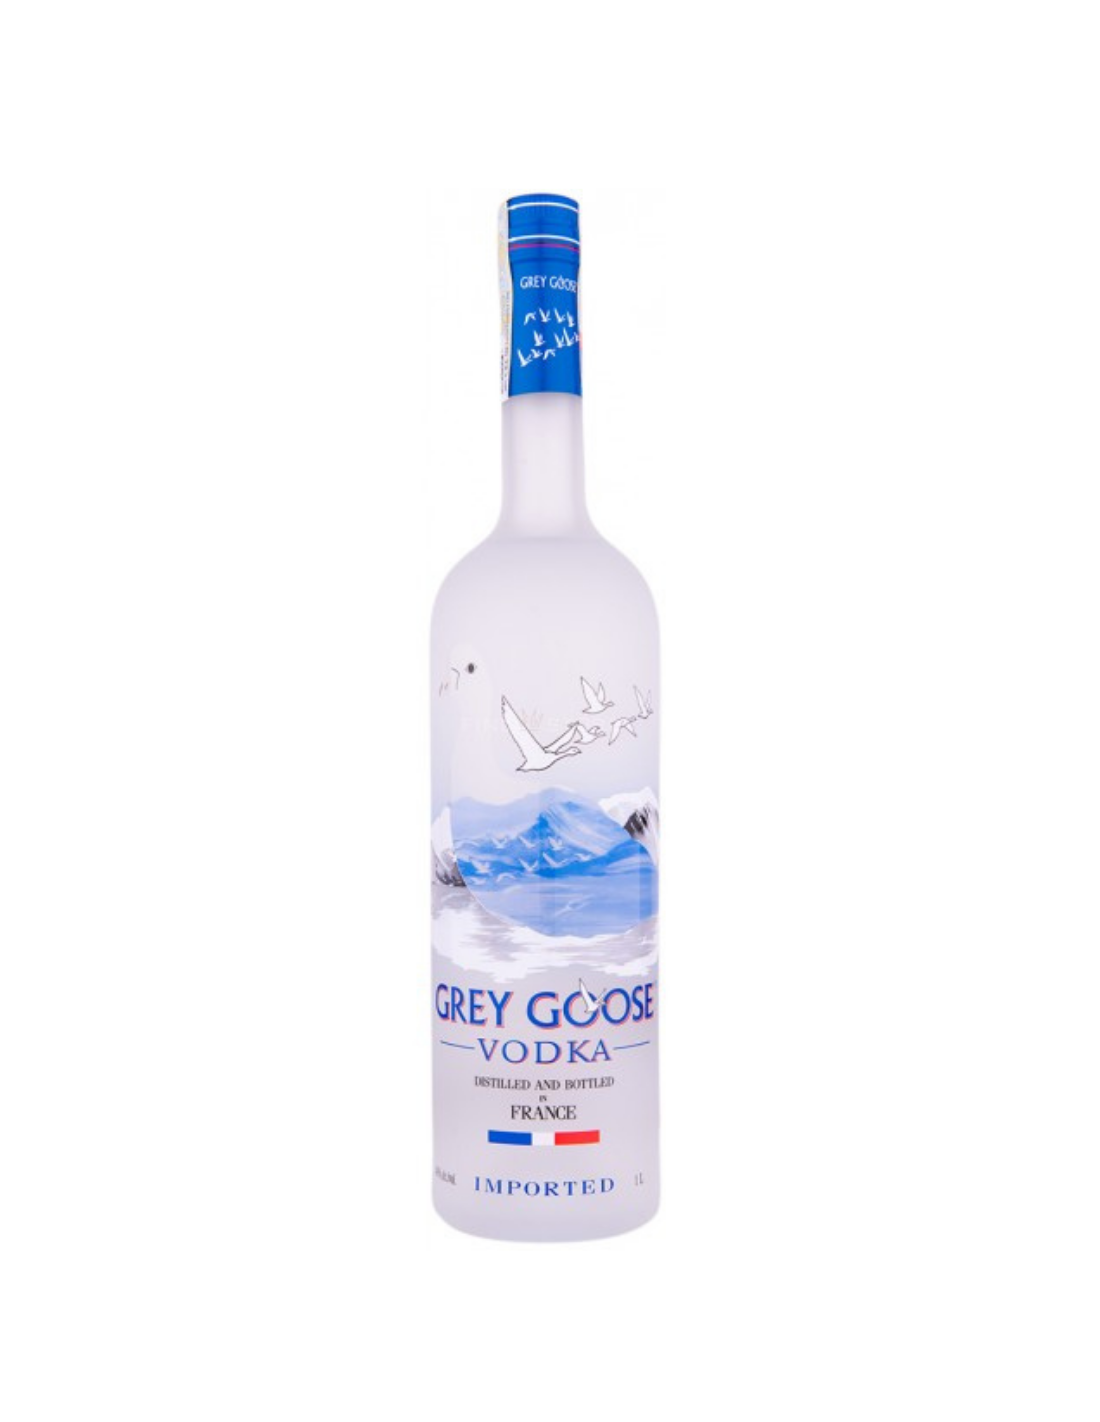 Vodca Grey Goose, 1L, 40% alc., Franta alcooldiscount.ro